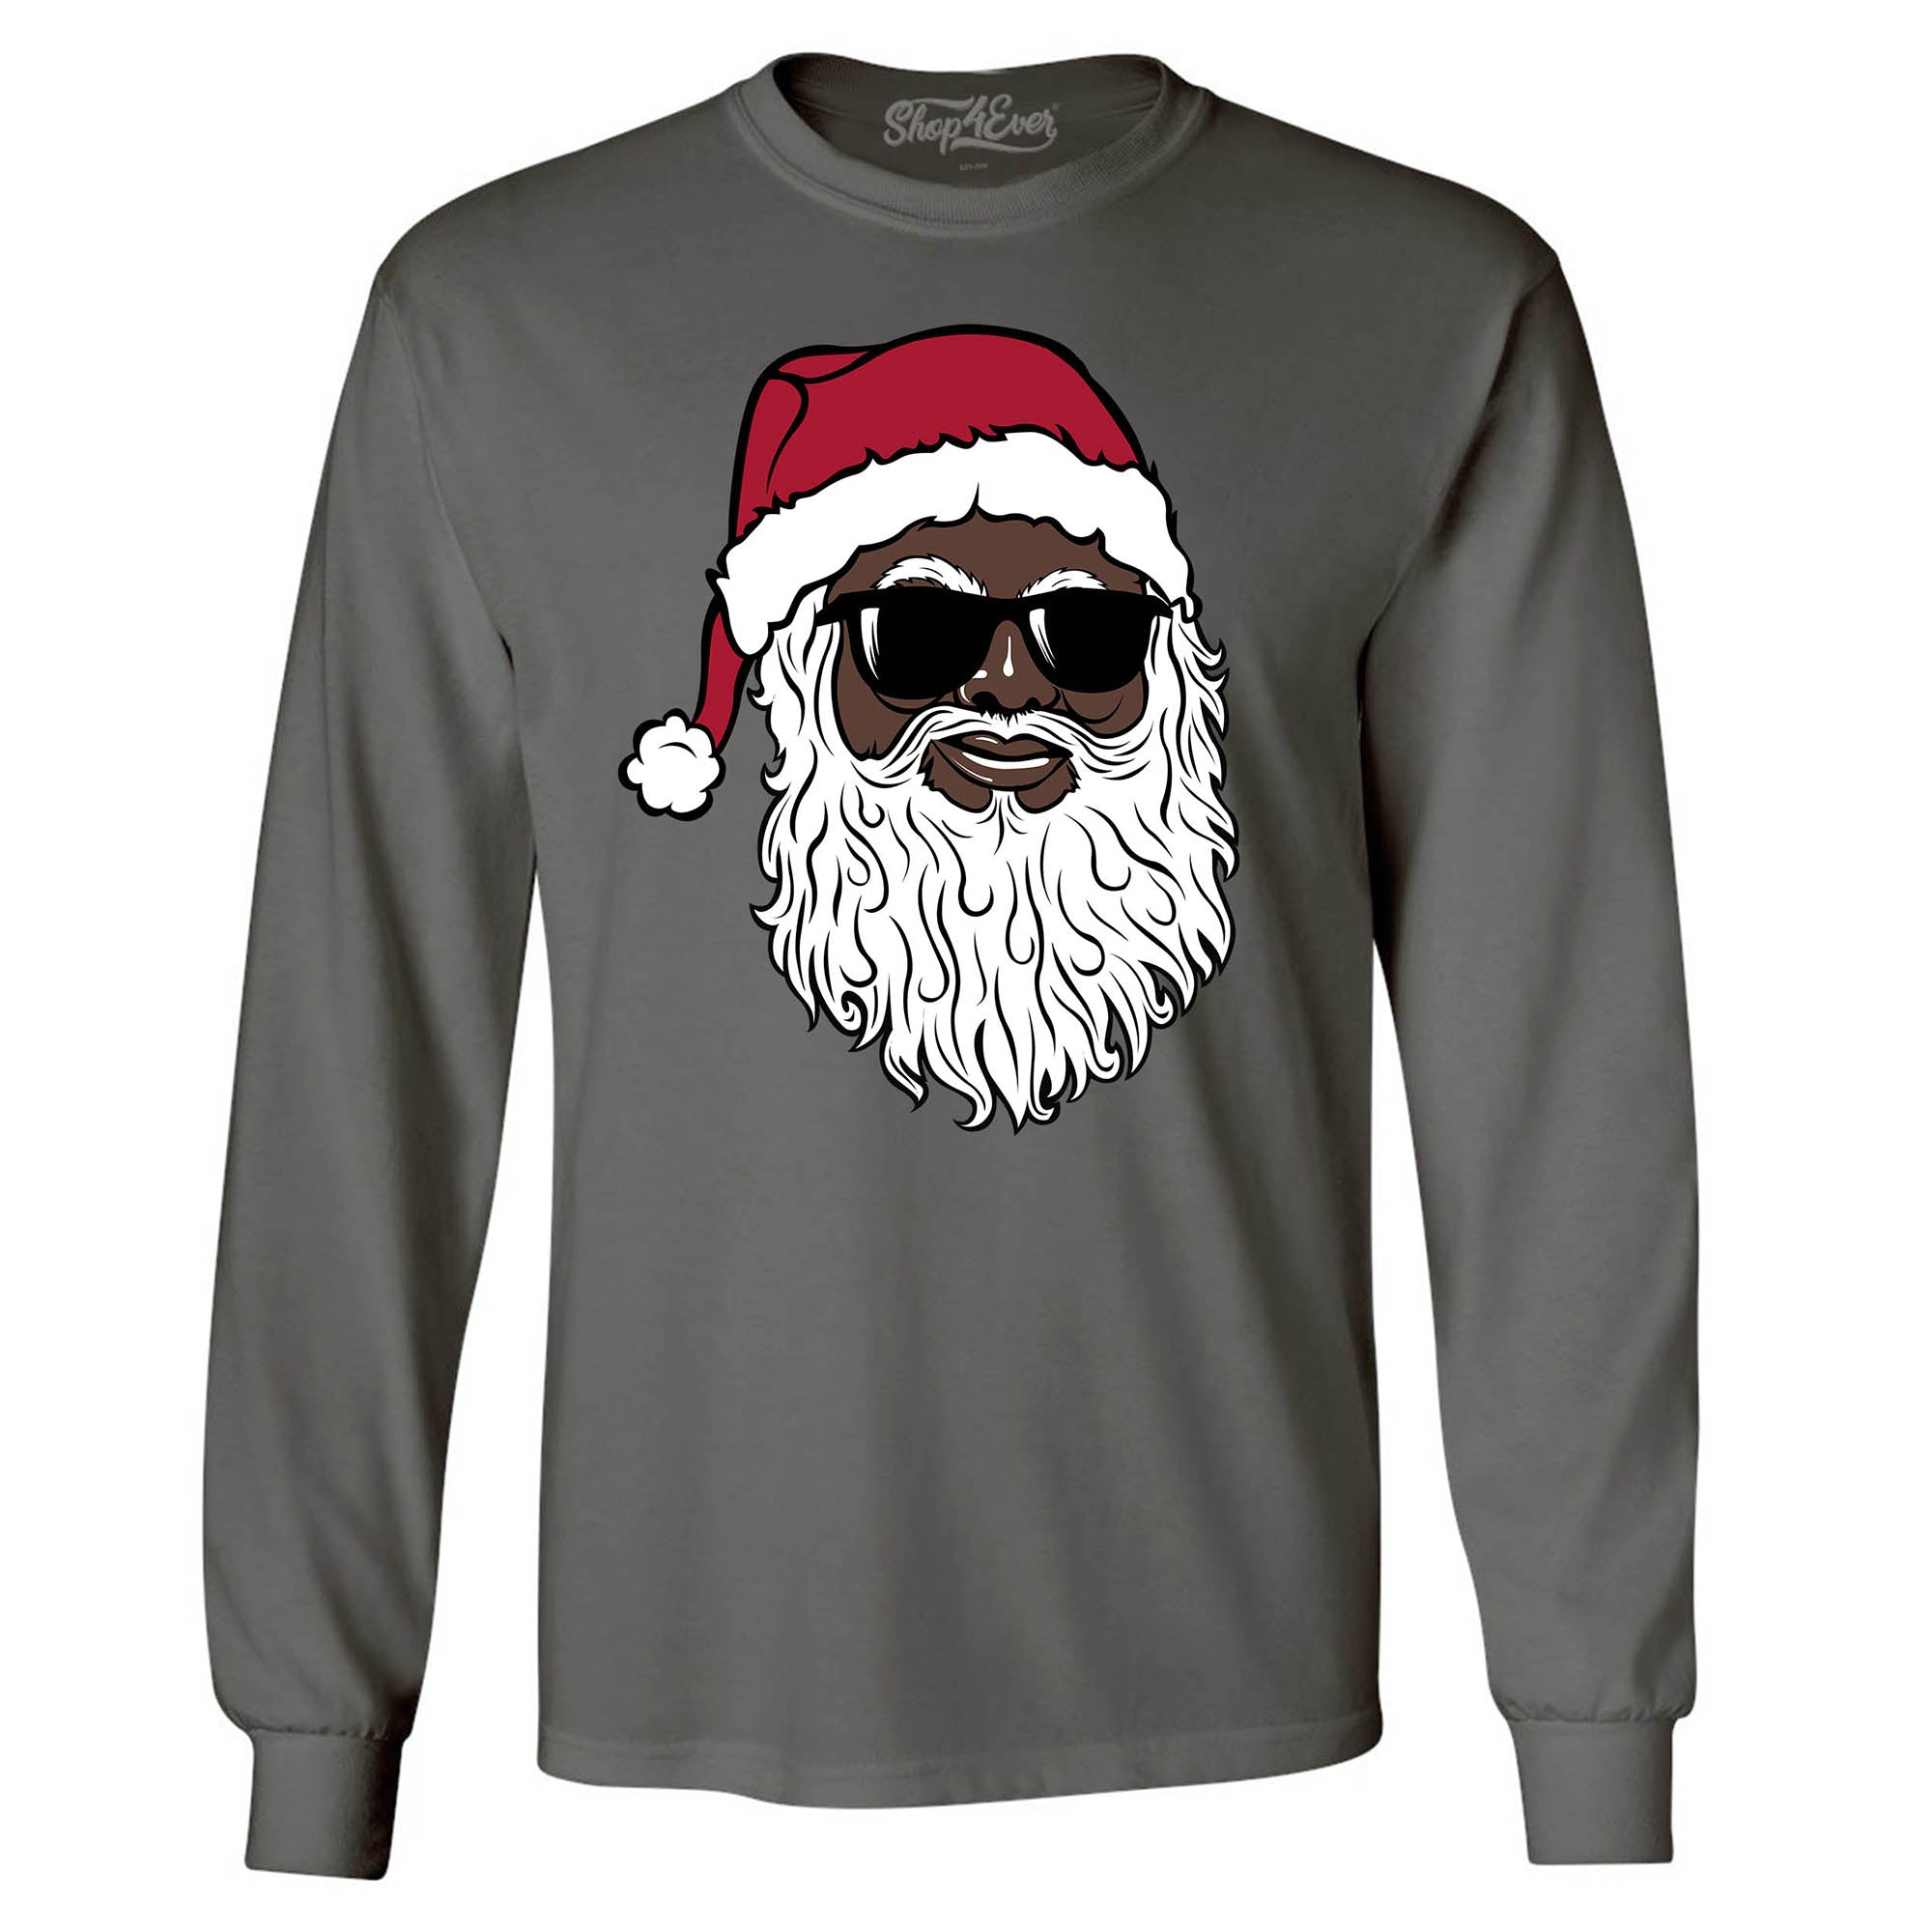 Santa Claus Wearing Sunglasses Christmas Xmas Long Sleeve Shirt